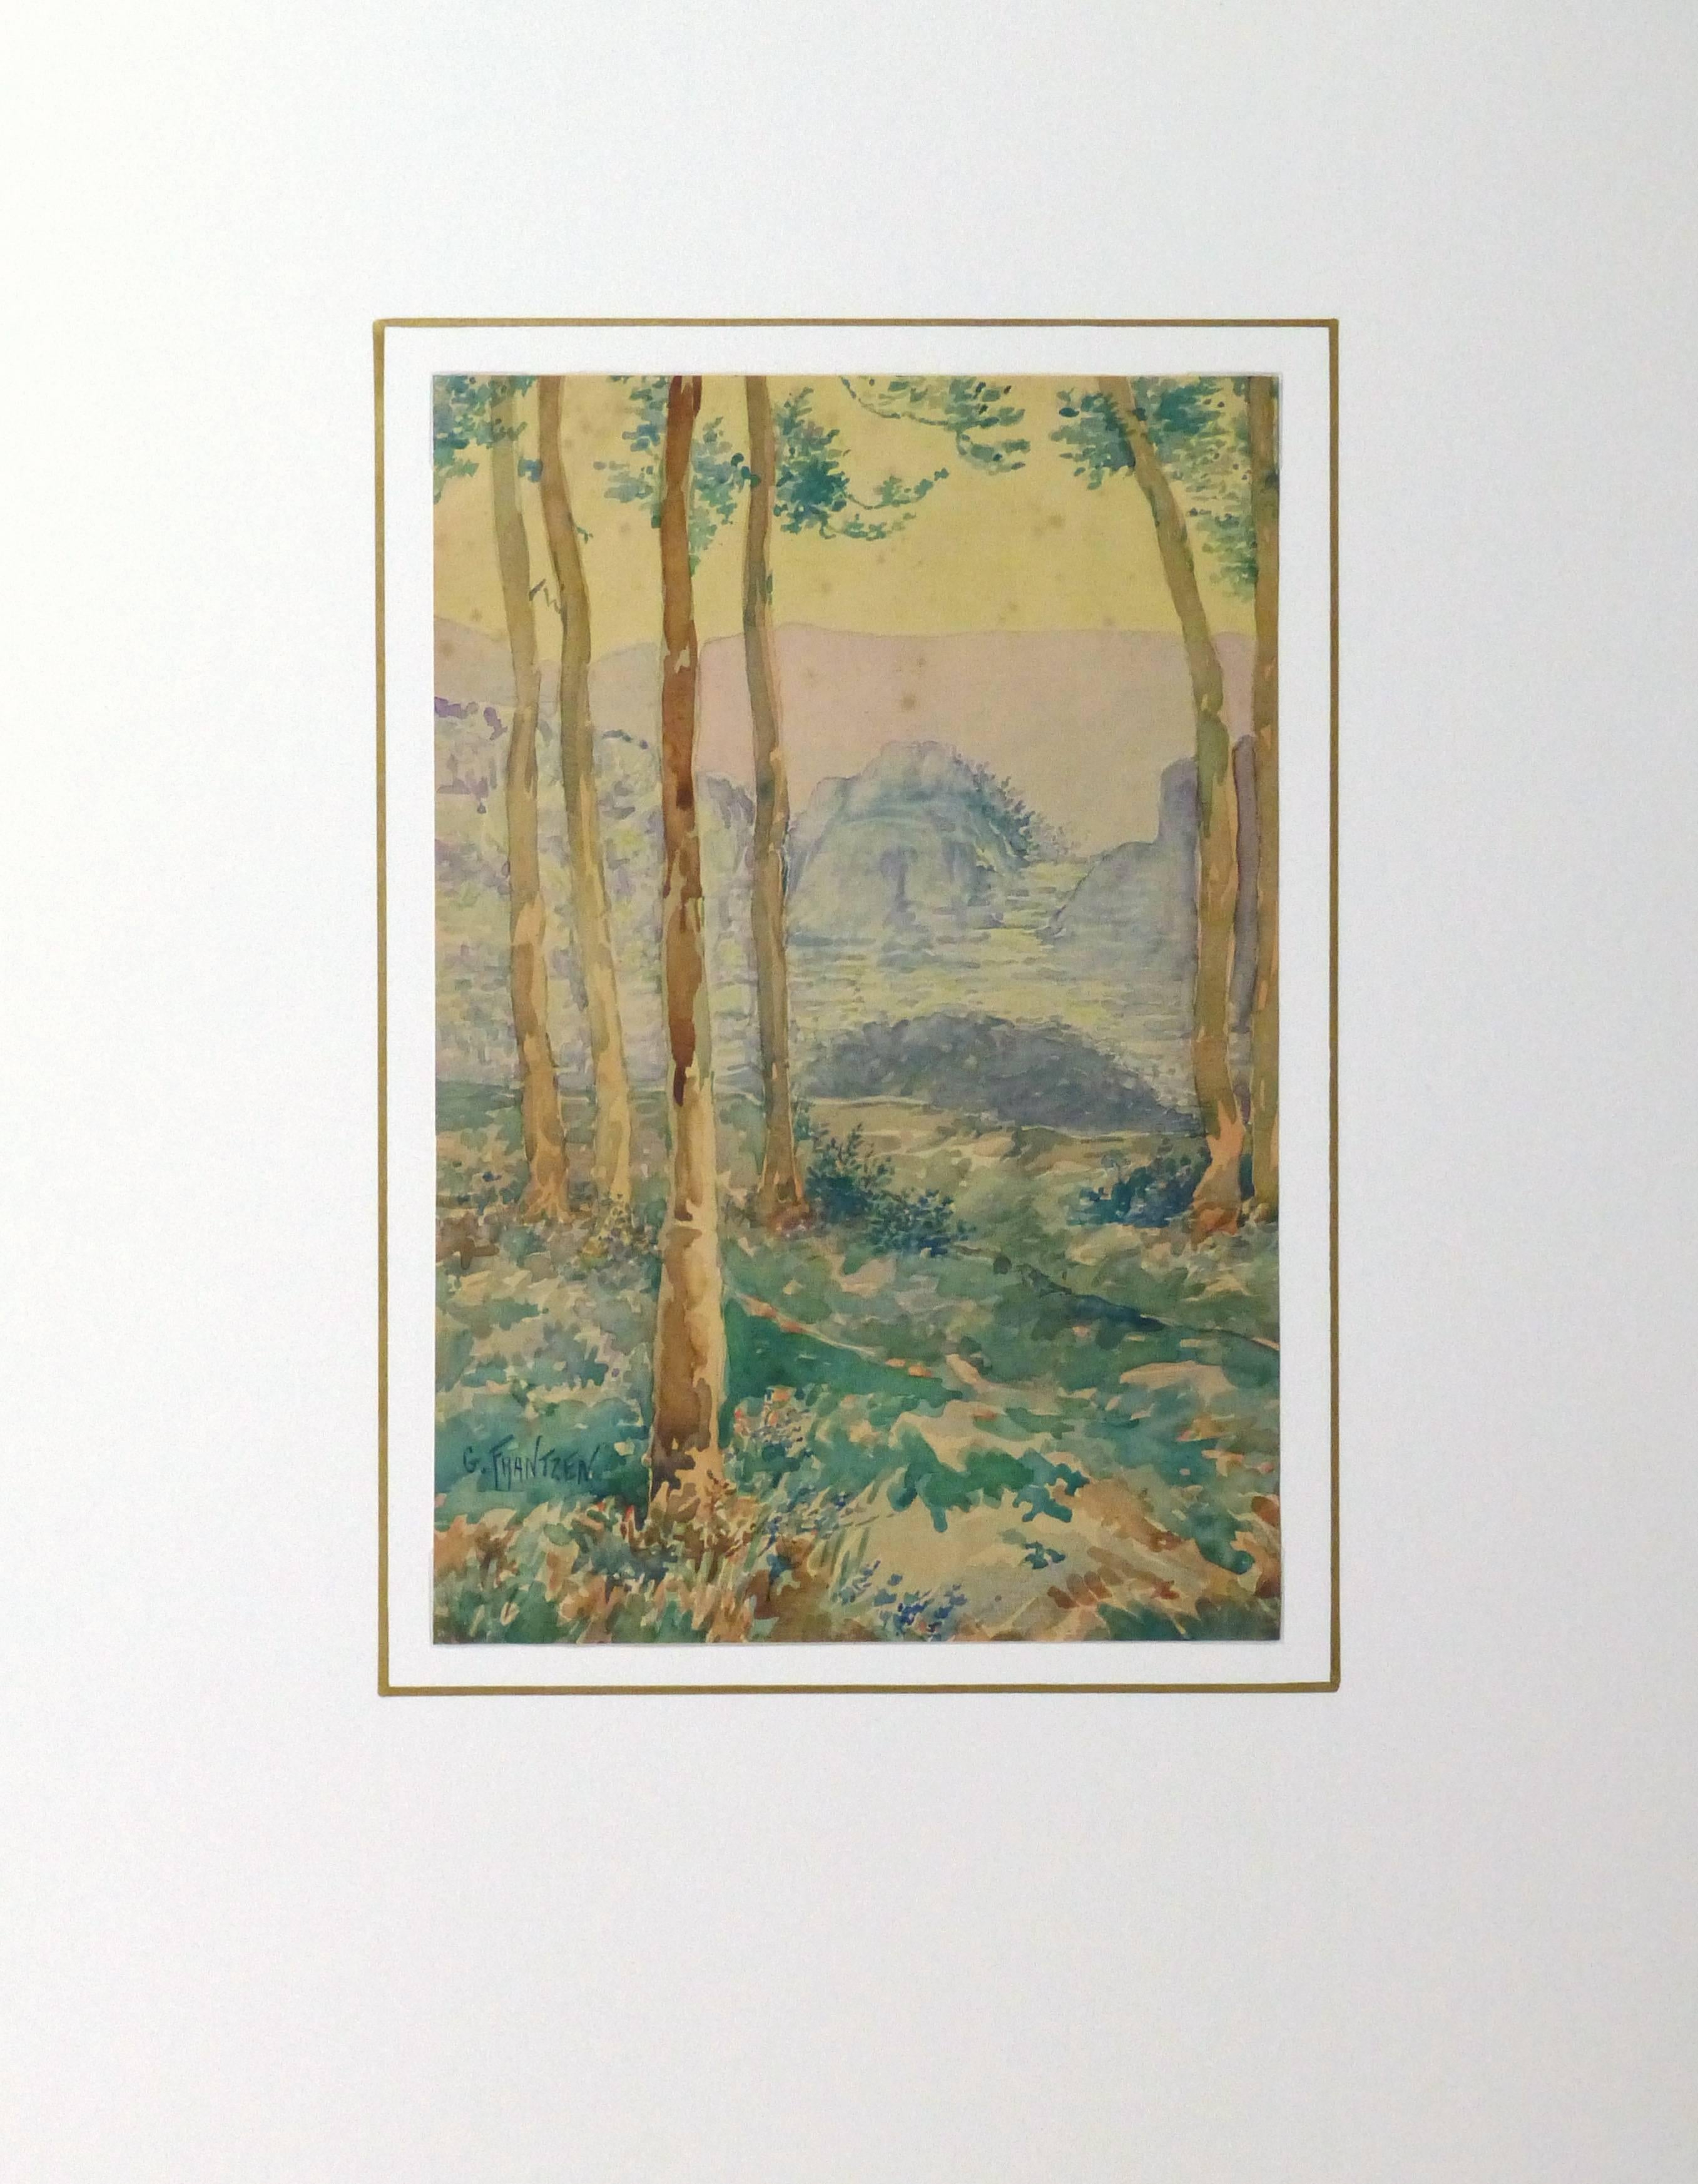 Antique Watercolor Landscape - Through the Tall Tress Mountains Appear - Gray Landscape Art by Gustave Frantzen